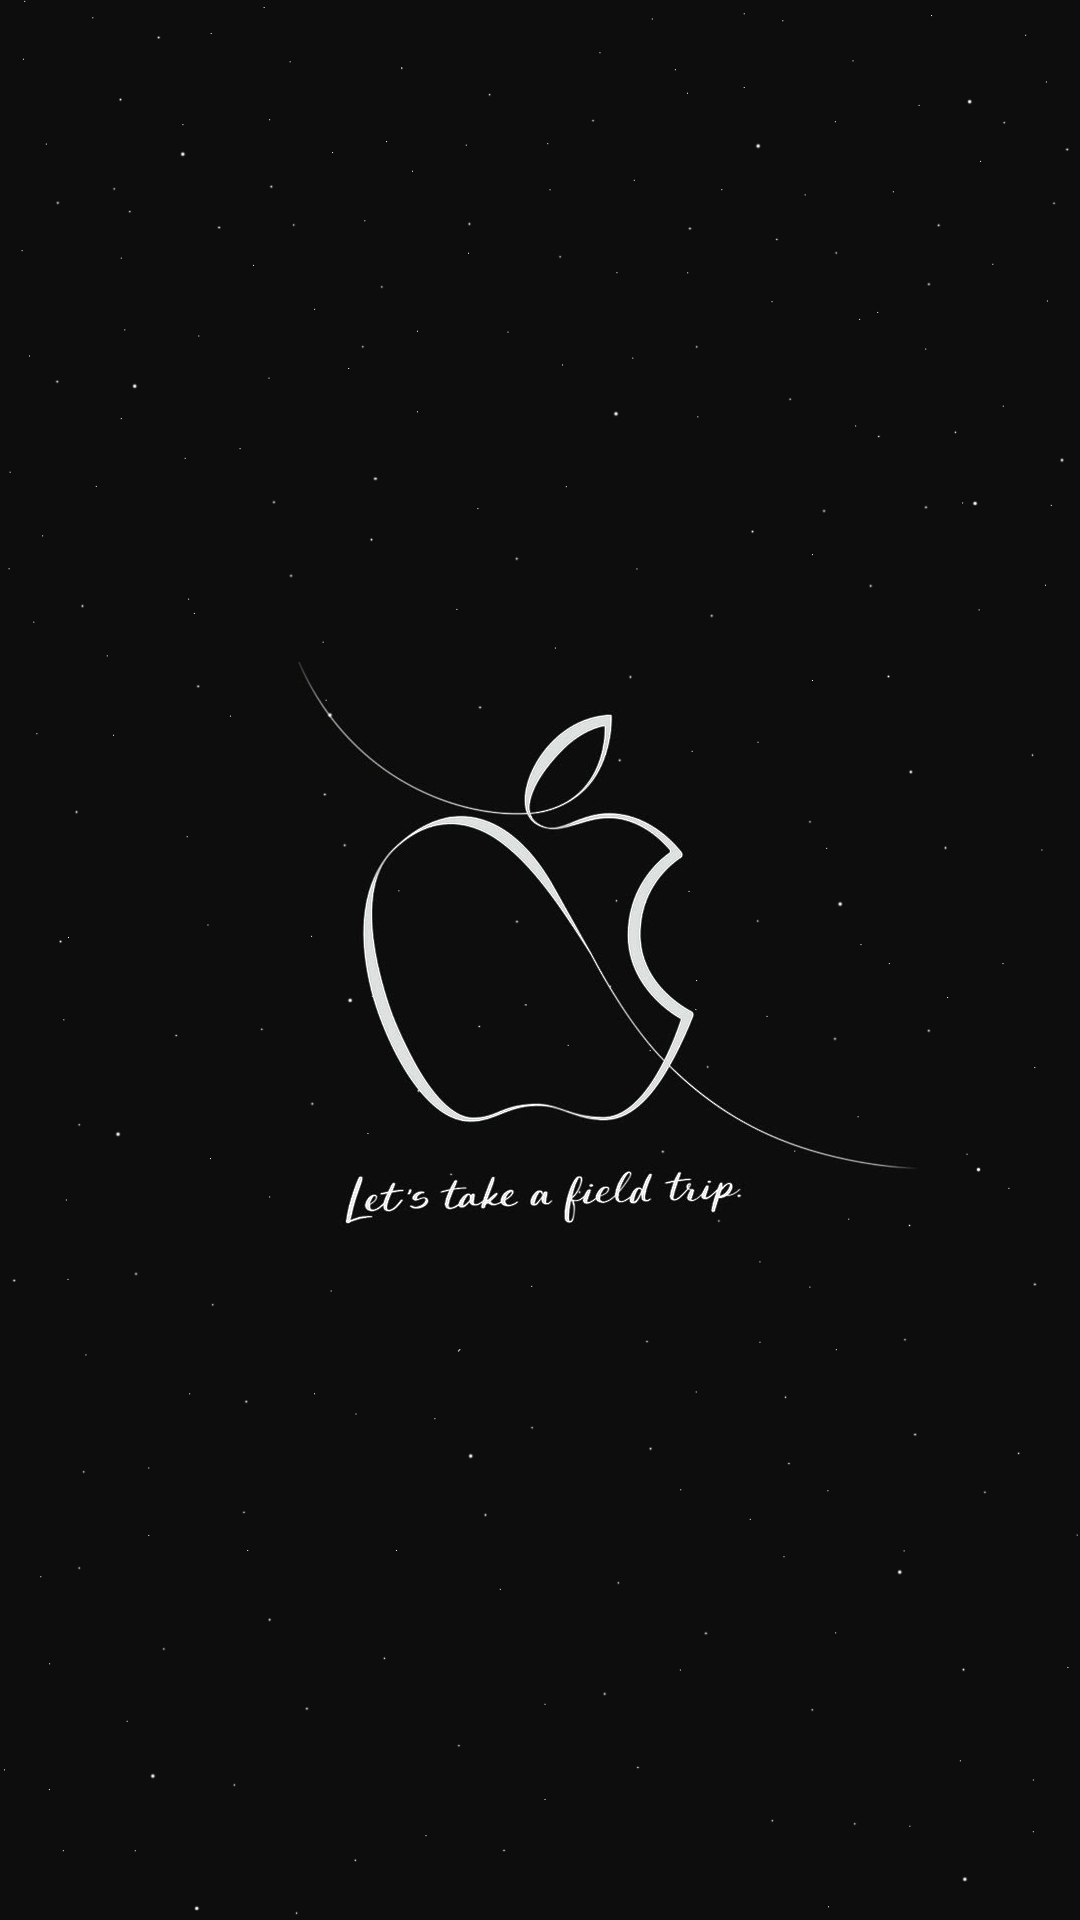 Black Apple Logo Iphone Wallpapers Top Free Black Apple Logo Iphone Backgrounds Wallpaperaccess